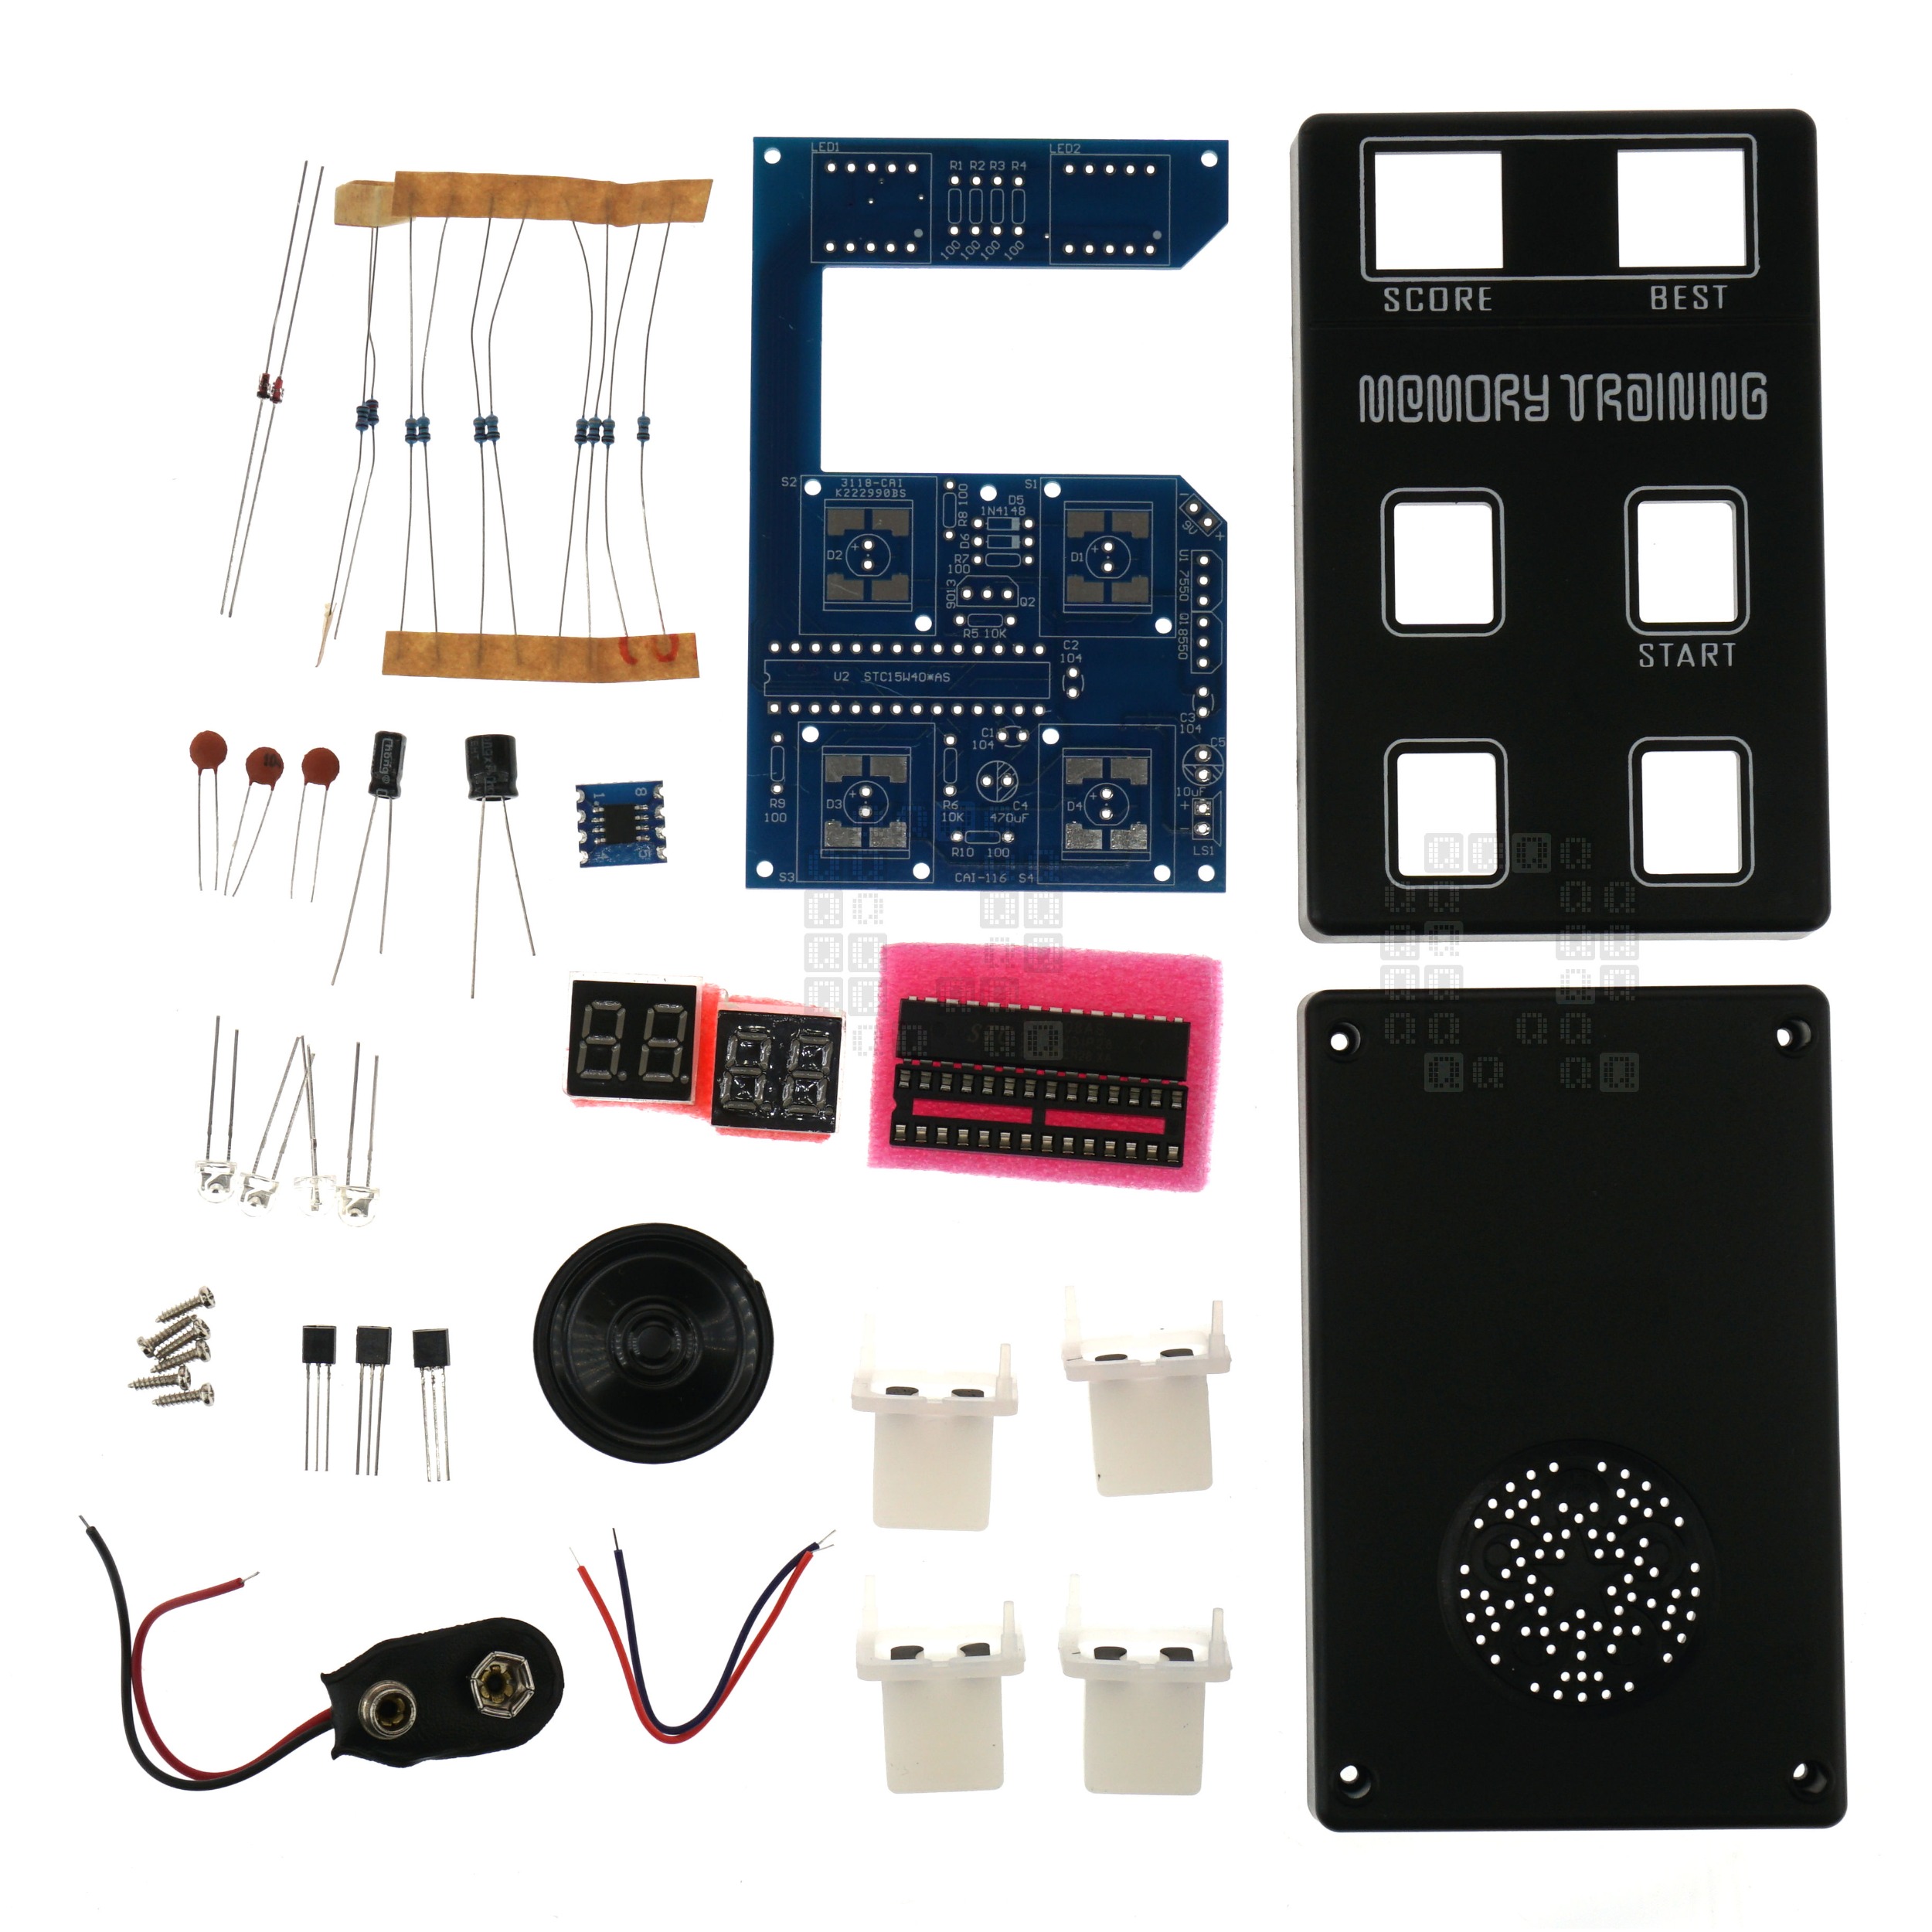 DIY Simon Memory Training Game Soldering Kit with Case, 9VDC